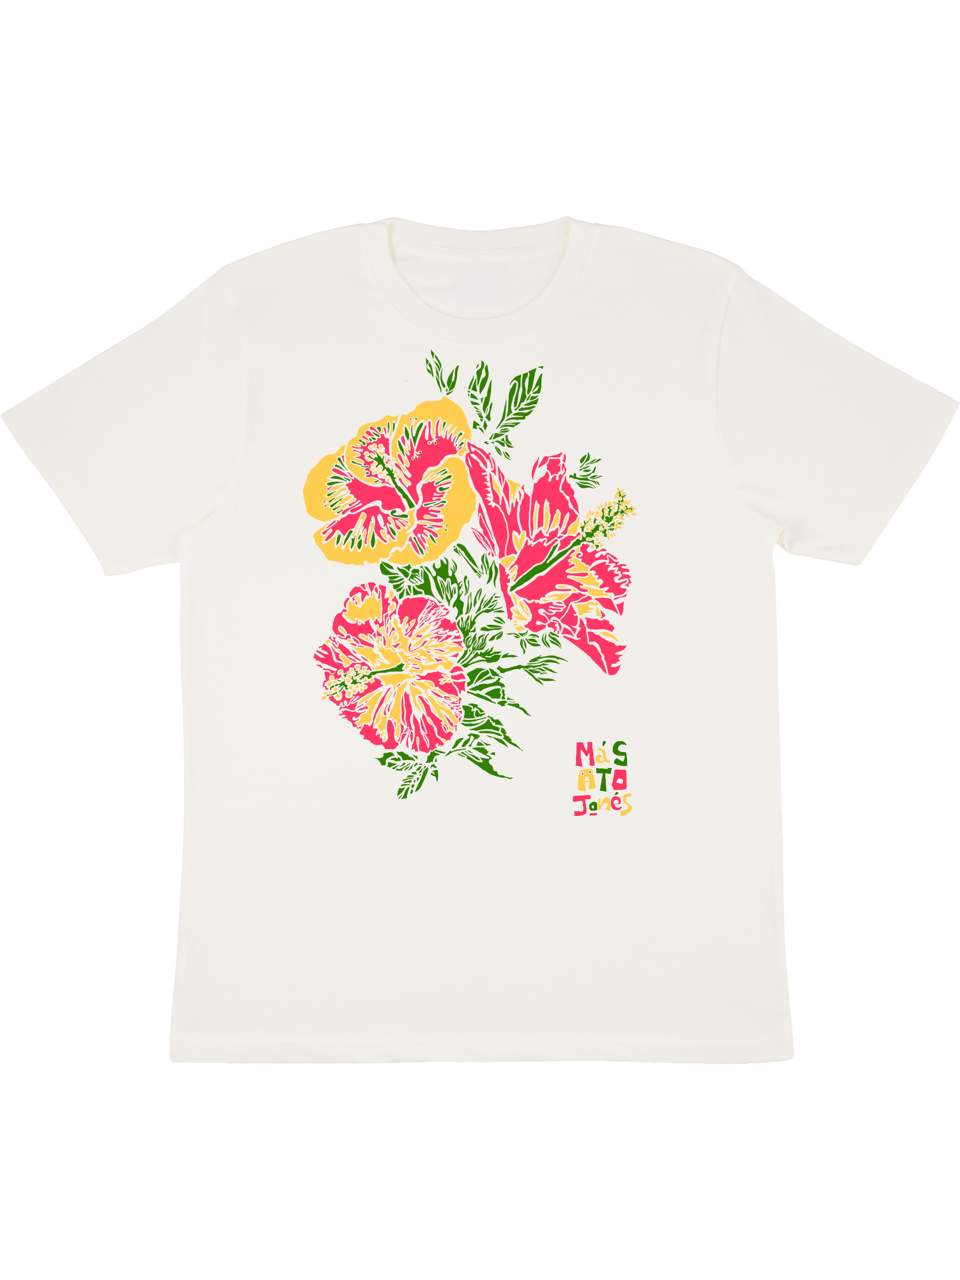 Lotus Flower White pre-order tshirt invest